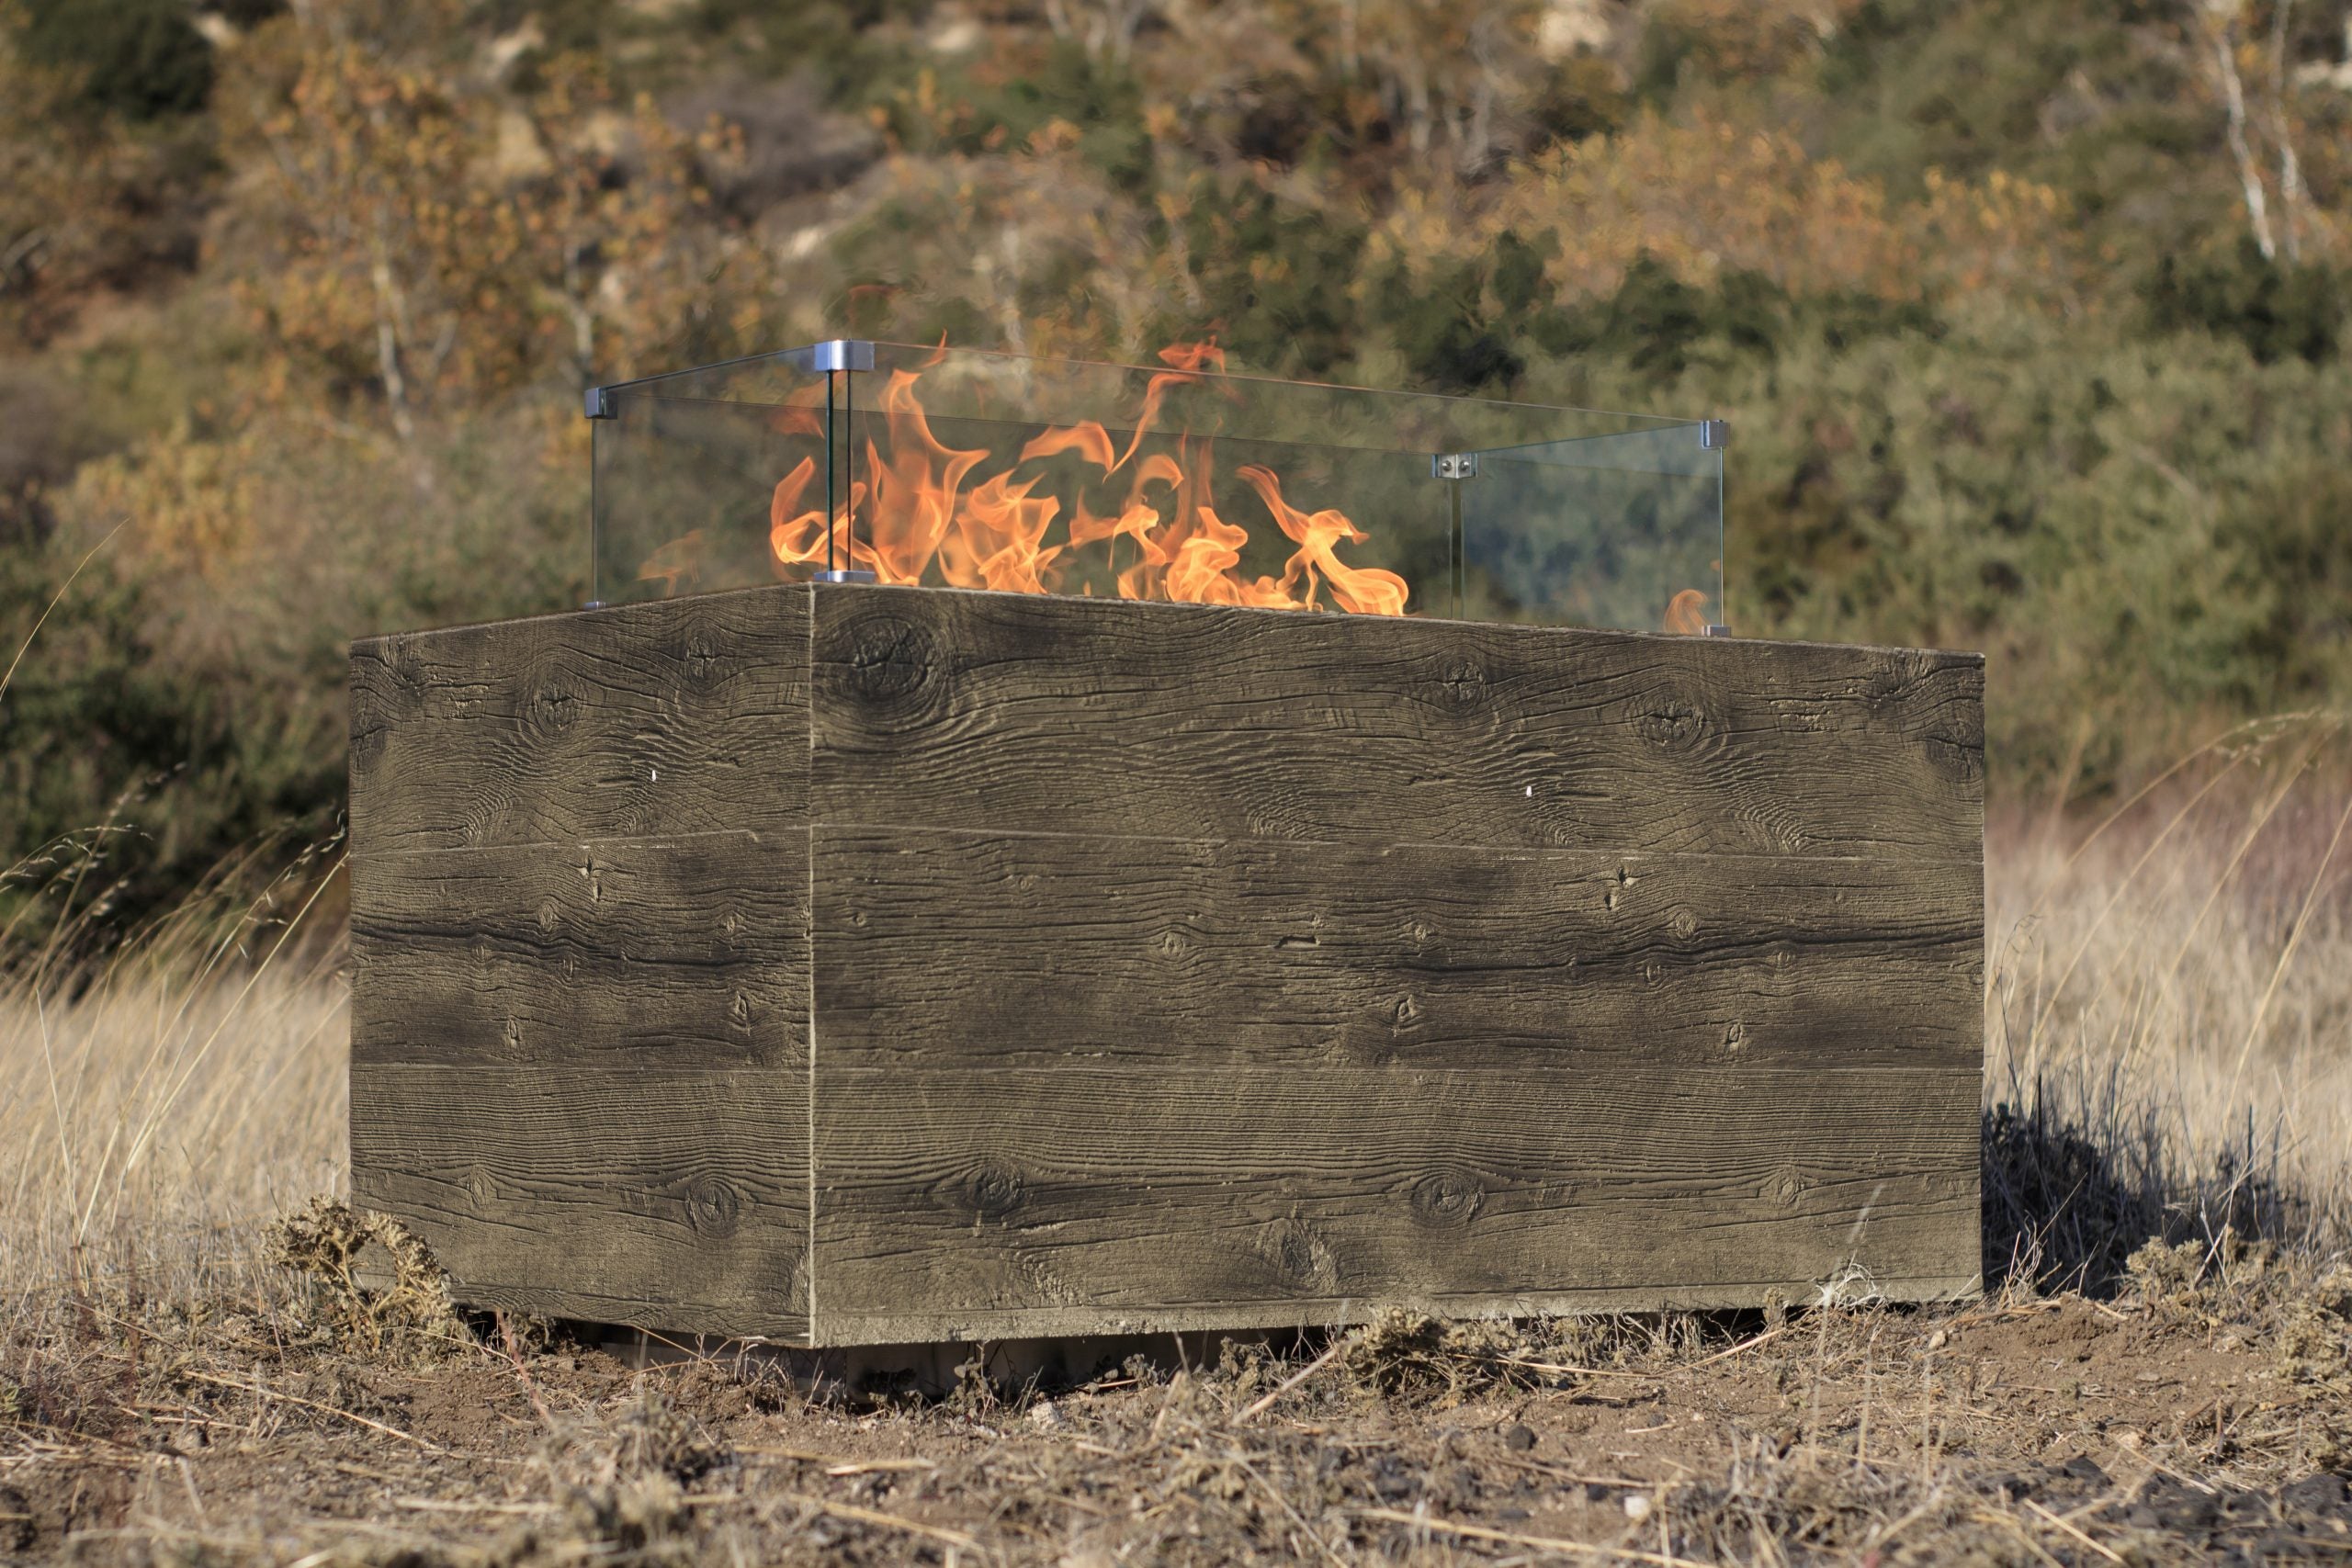 The Outdoor Plus - Coronado Woodgrain Concrete Fire Pit - OPT-COR84